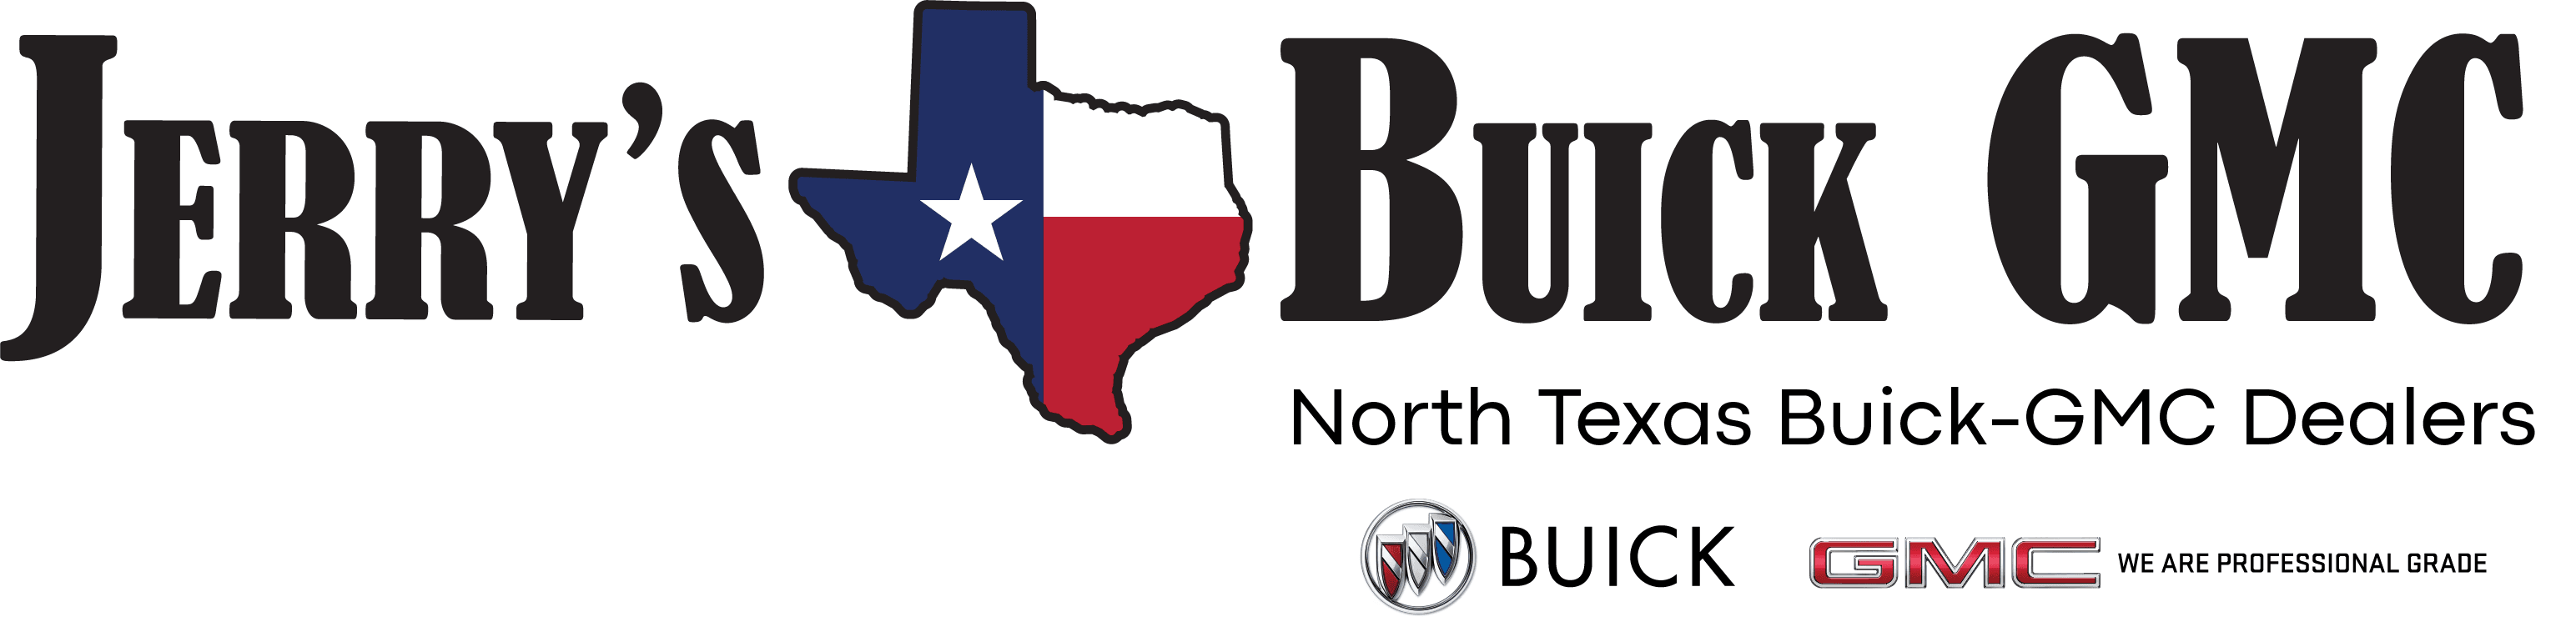 JDBG 51113 21 ART North Texas Logo